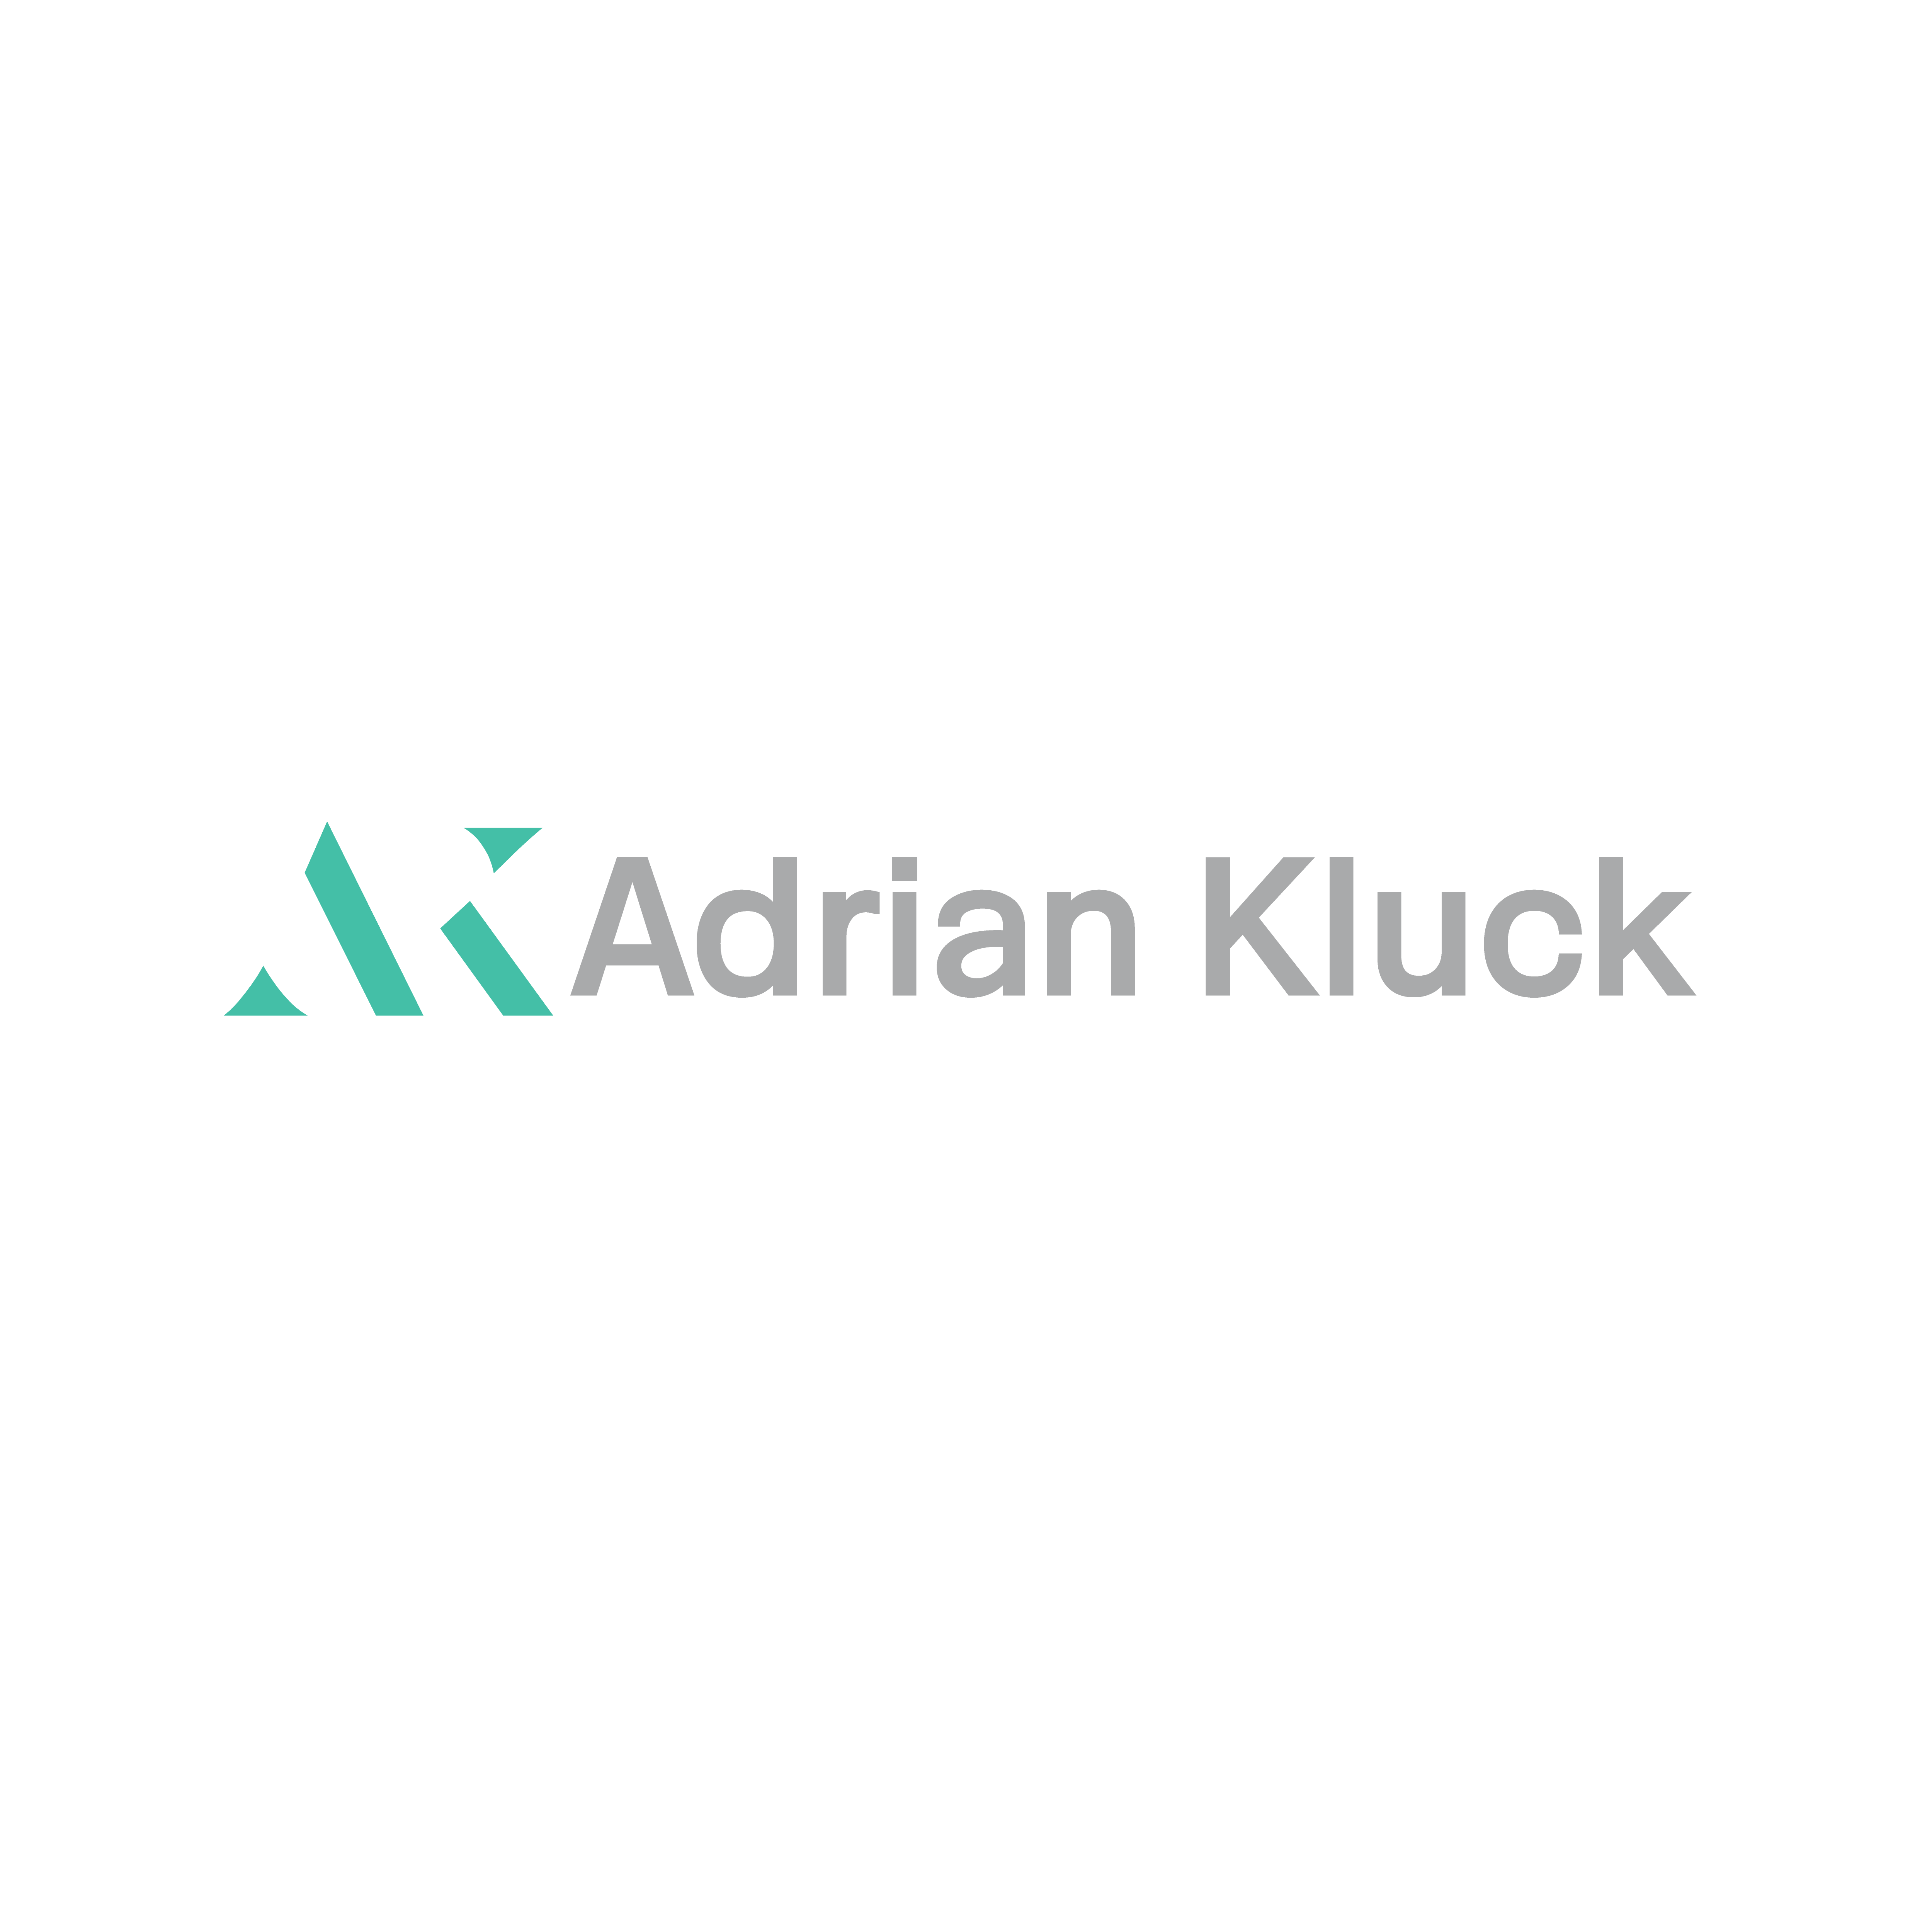 adrian kluck logo